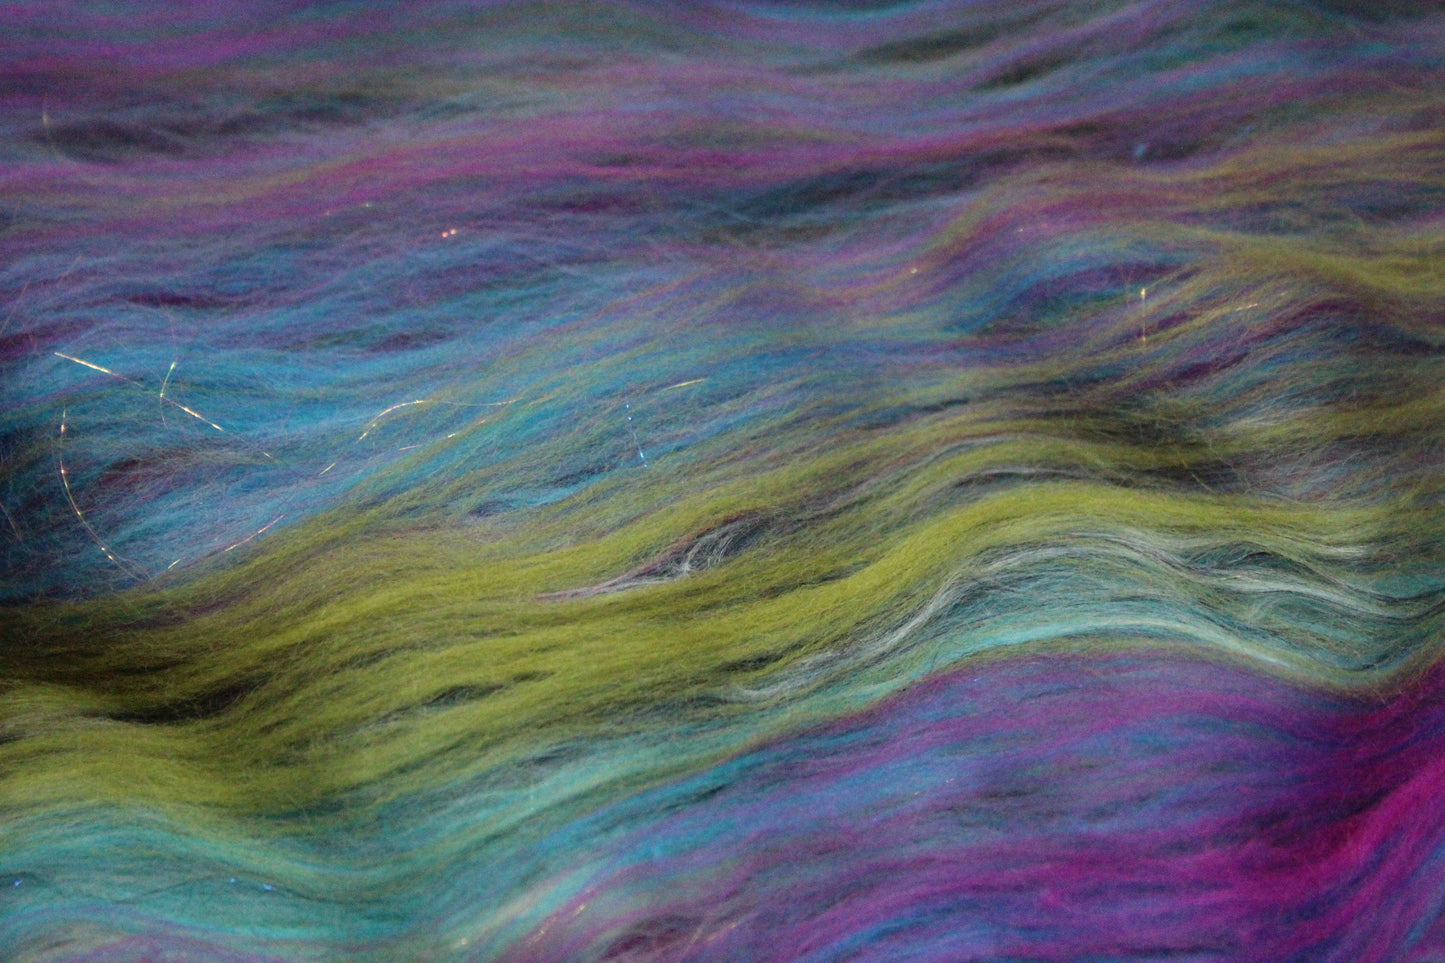 Super Soft 18.5 Micron Merino Wool Art Batt  - Purple Green Blue Pink - 111 grams 3.9 oz - Wool for felting, spinning and weaving